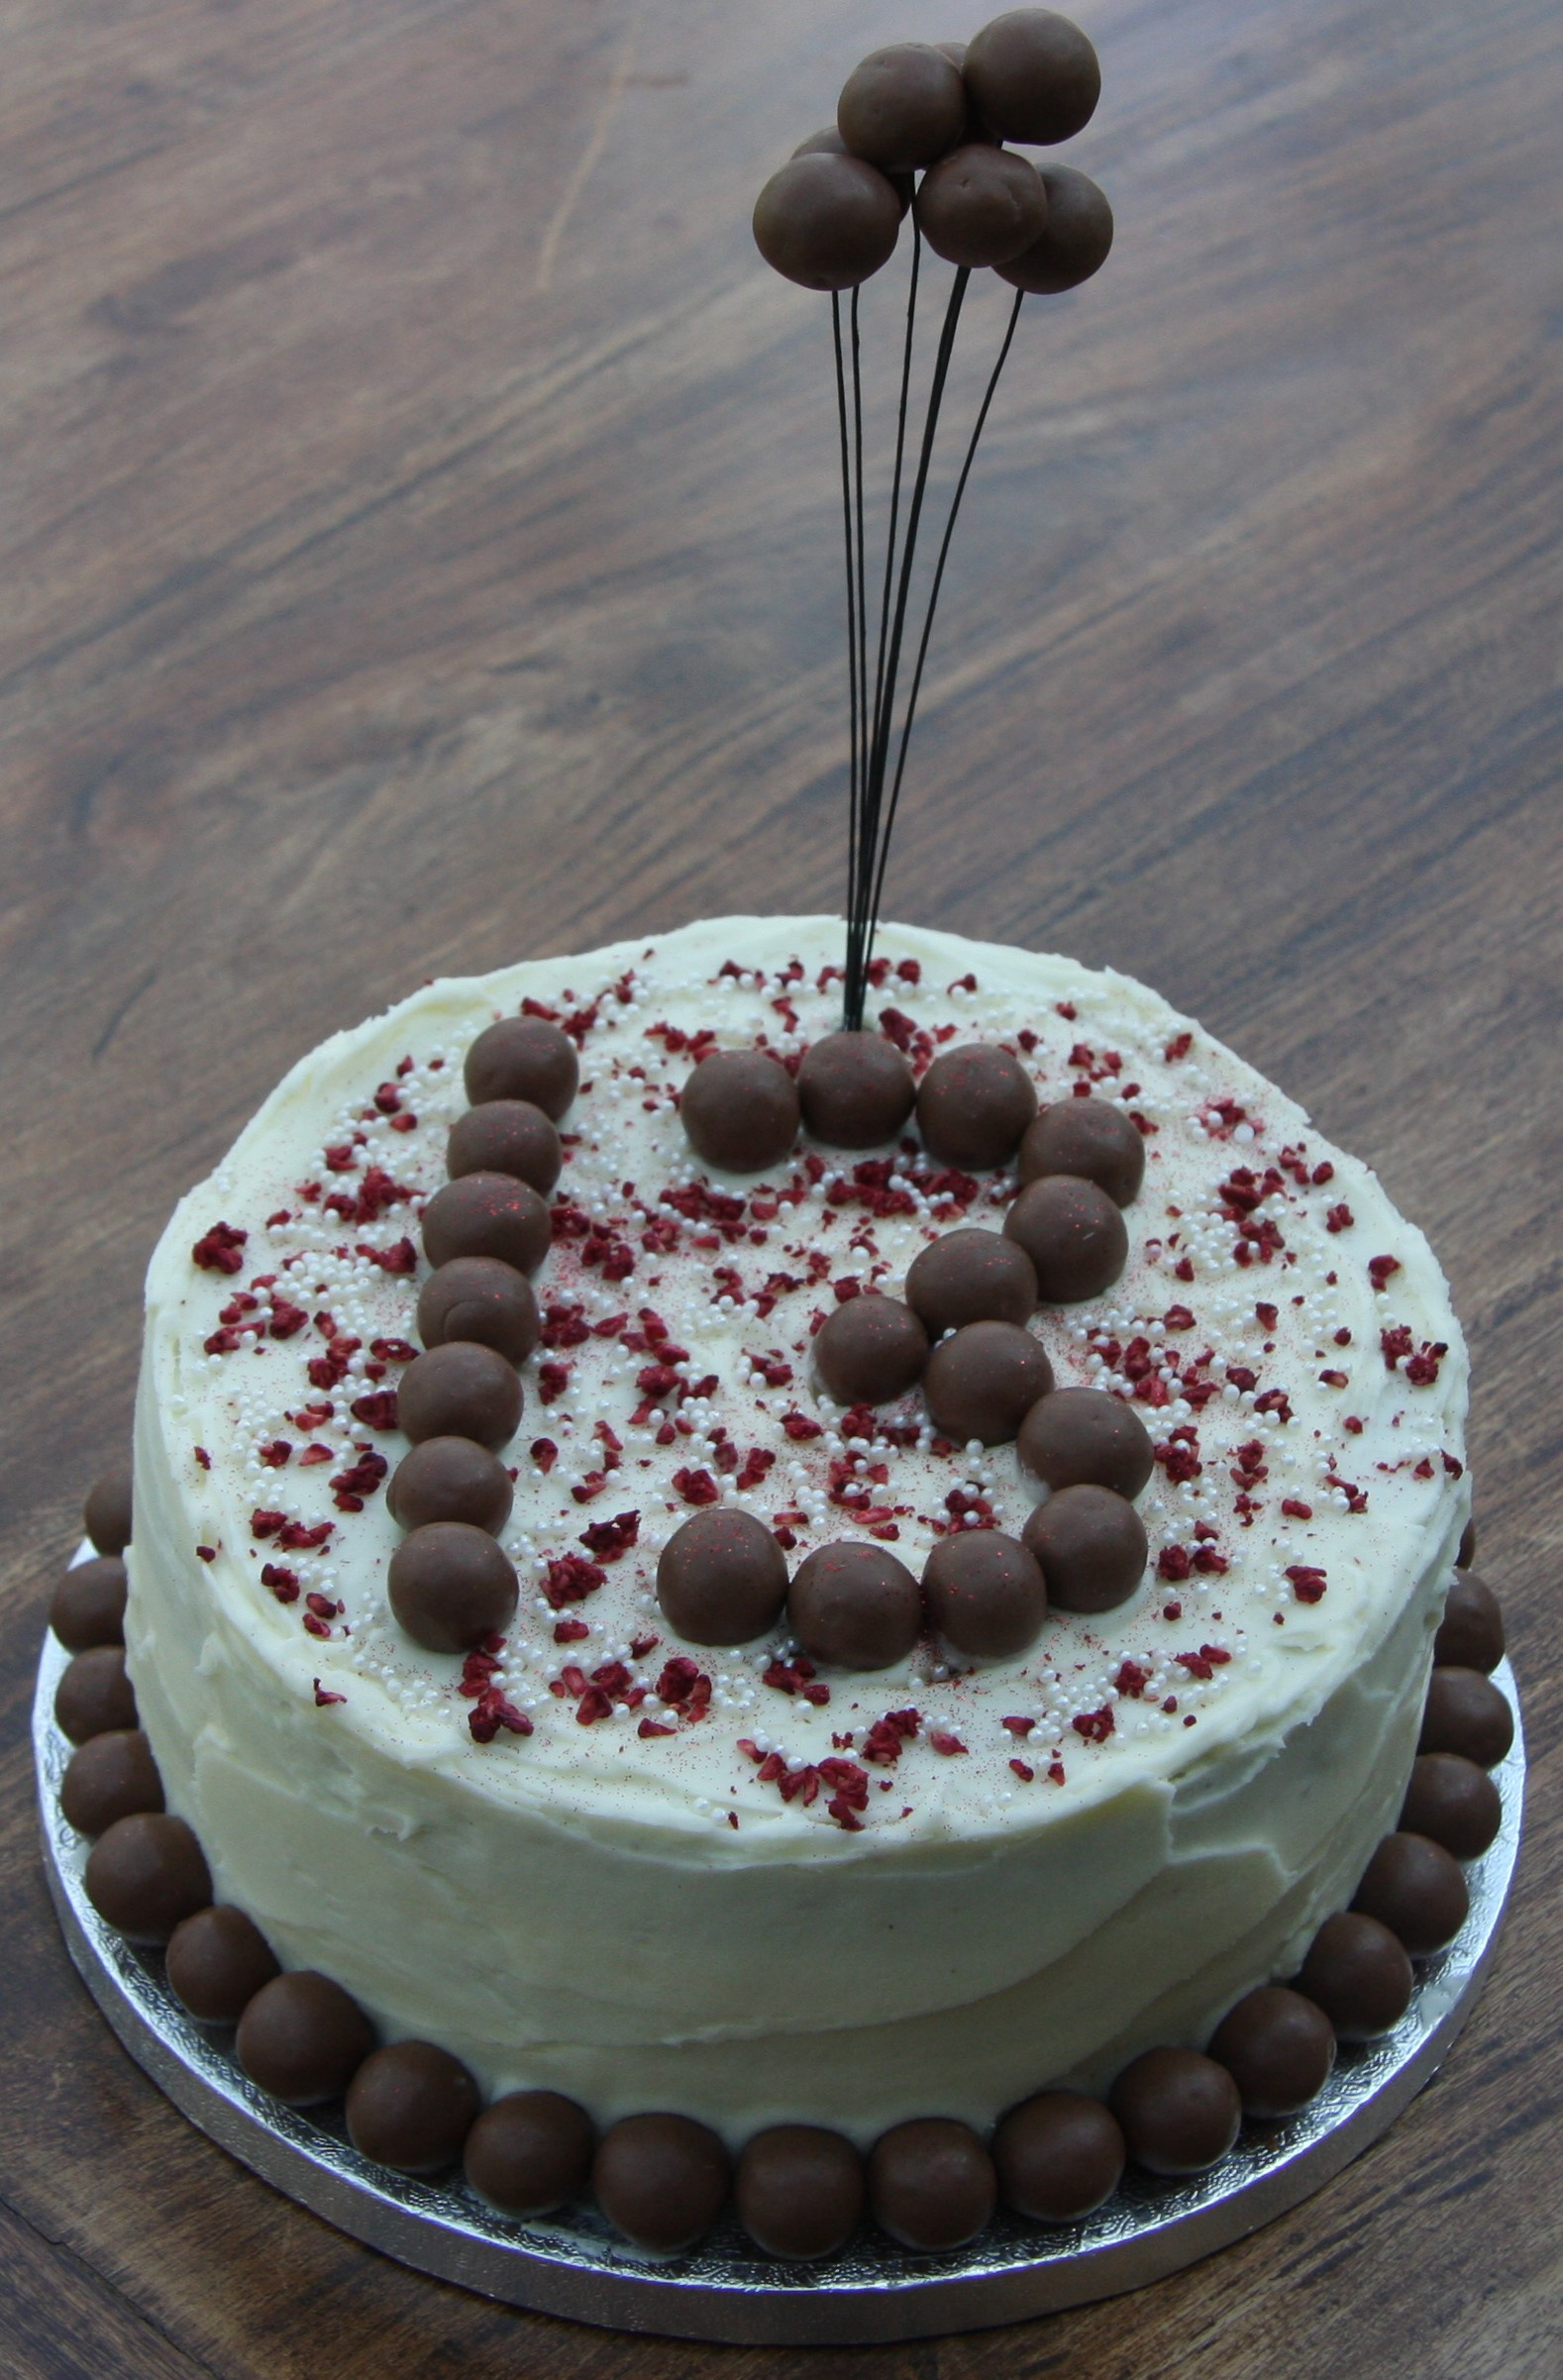 Picture Of Birthday Cakes
 More Birthday Cake Ideas – lovinghomemade